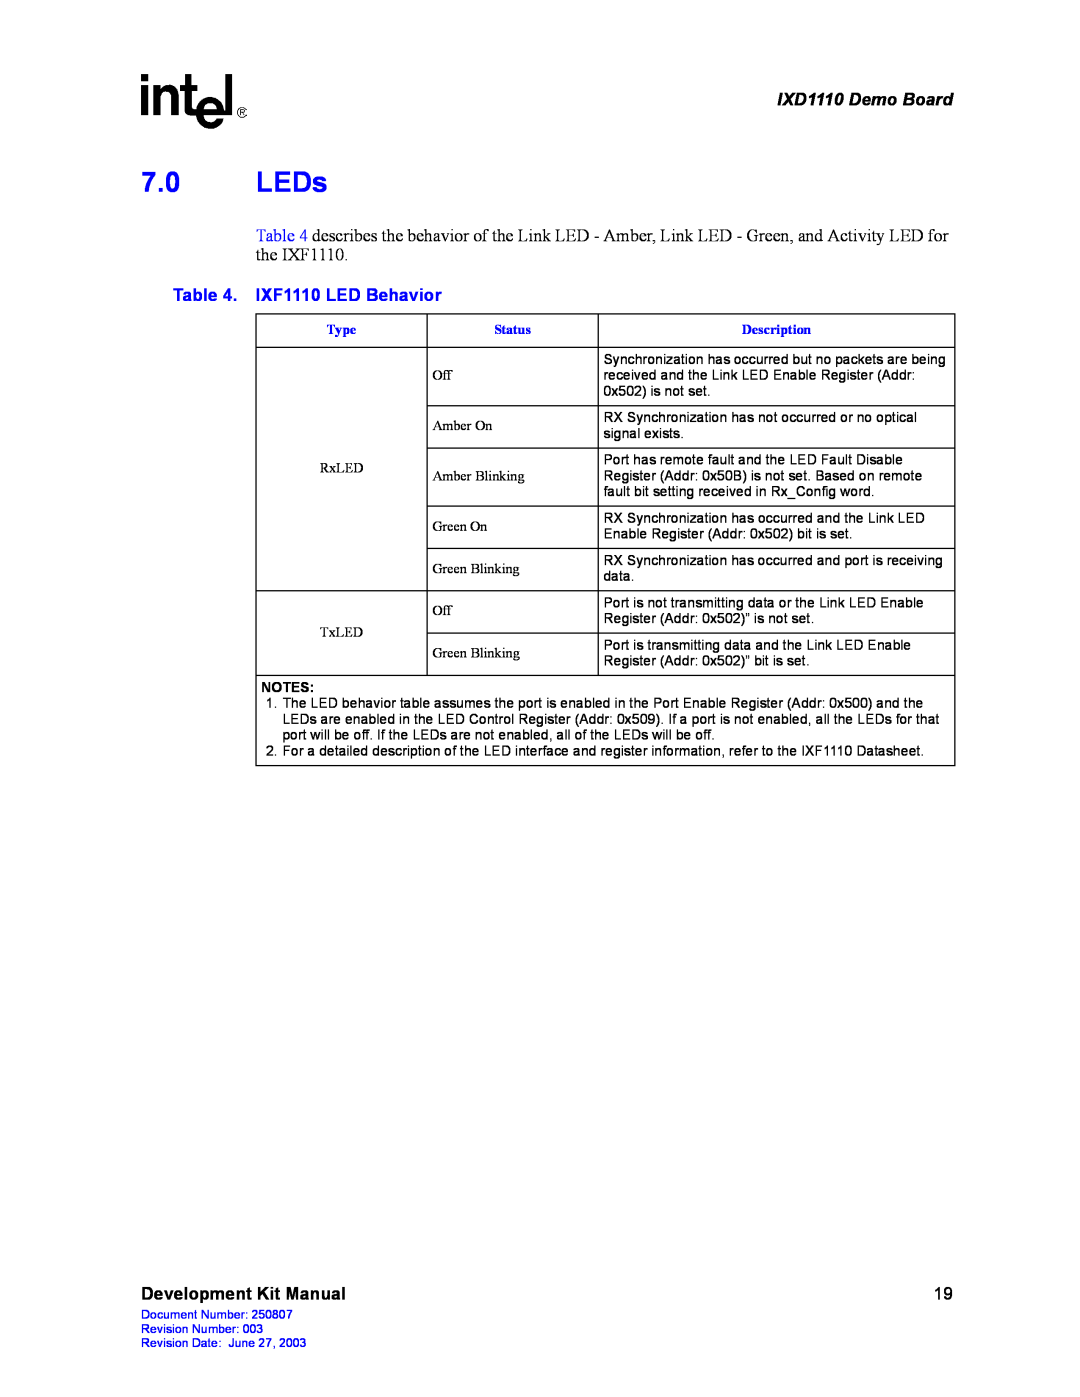 Intel manual LEDs, IXF1110 LED Behavior, IXD1110 Demo Board, Development Kit Manual, Type, Status, Description 